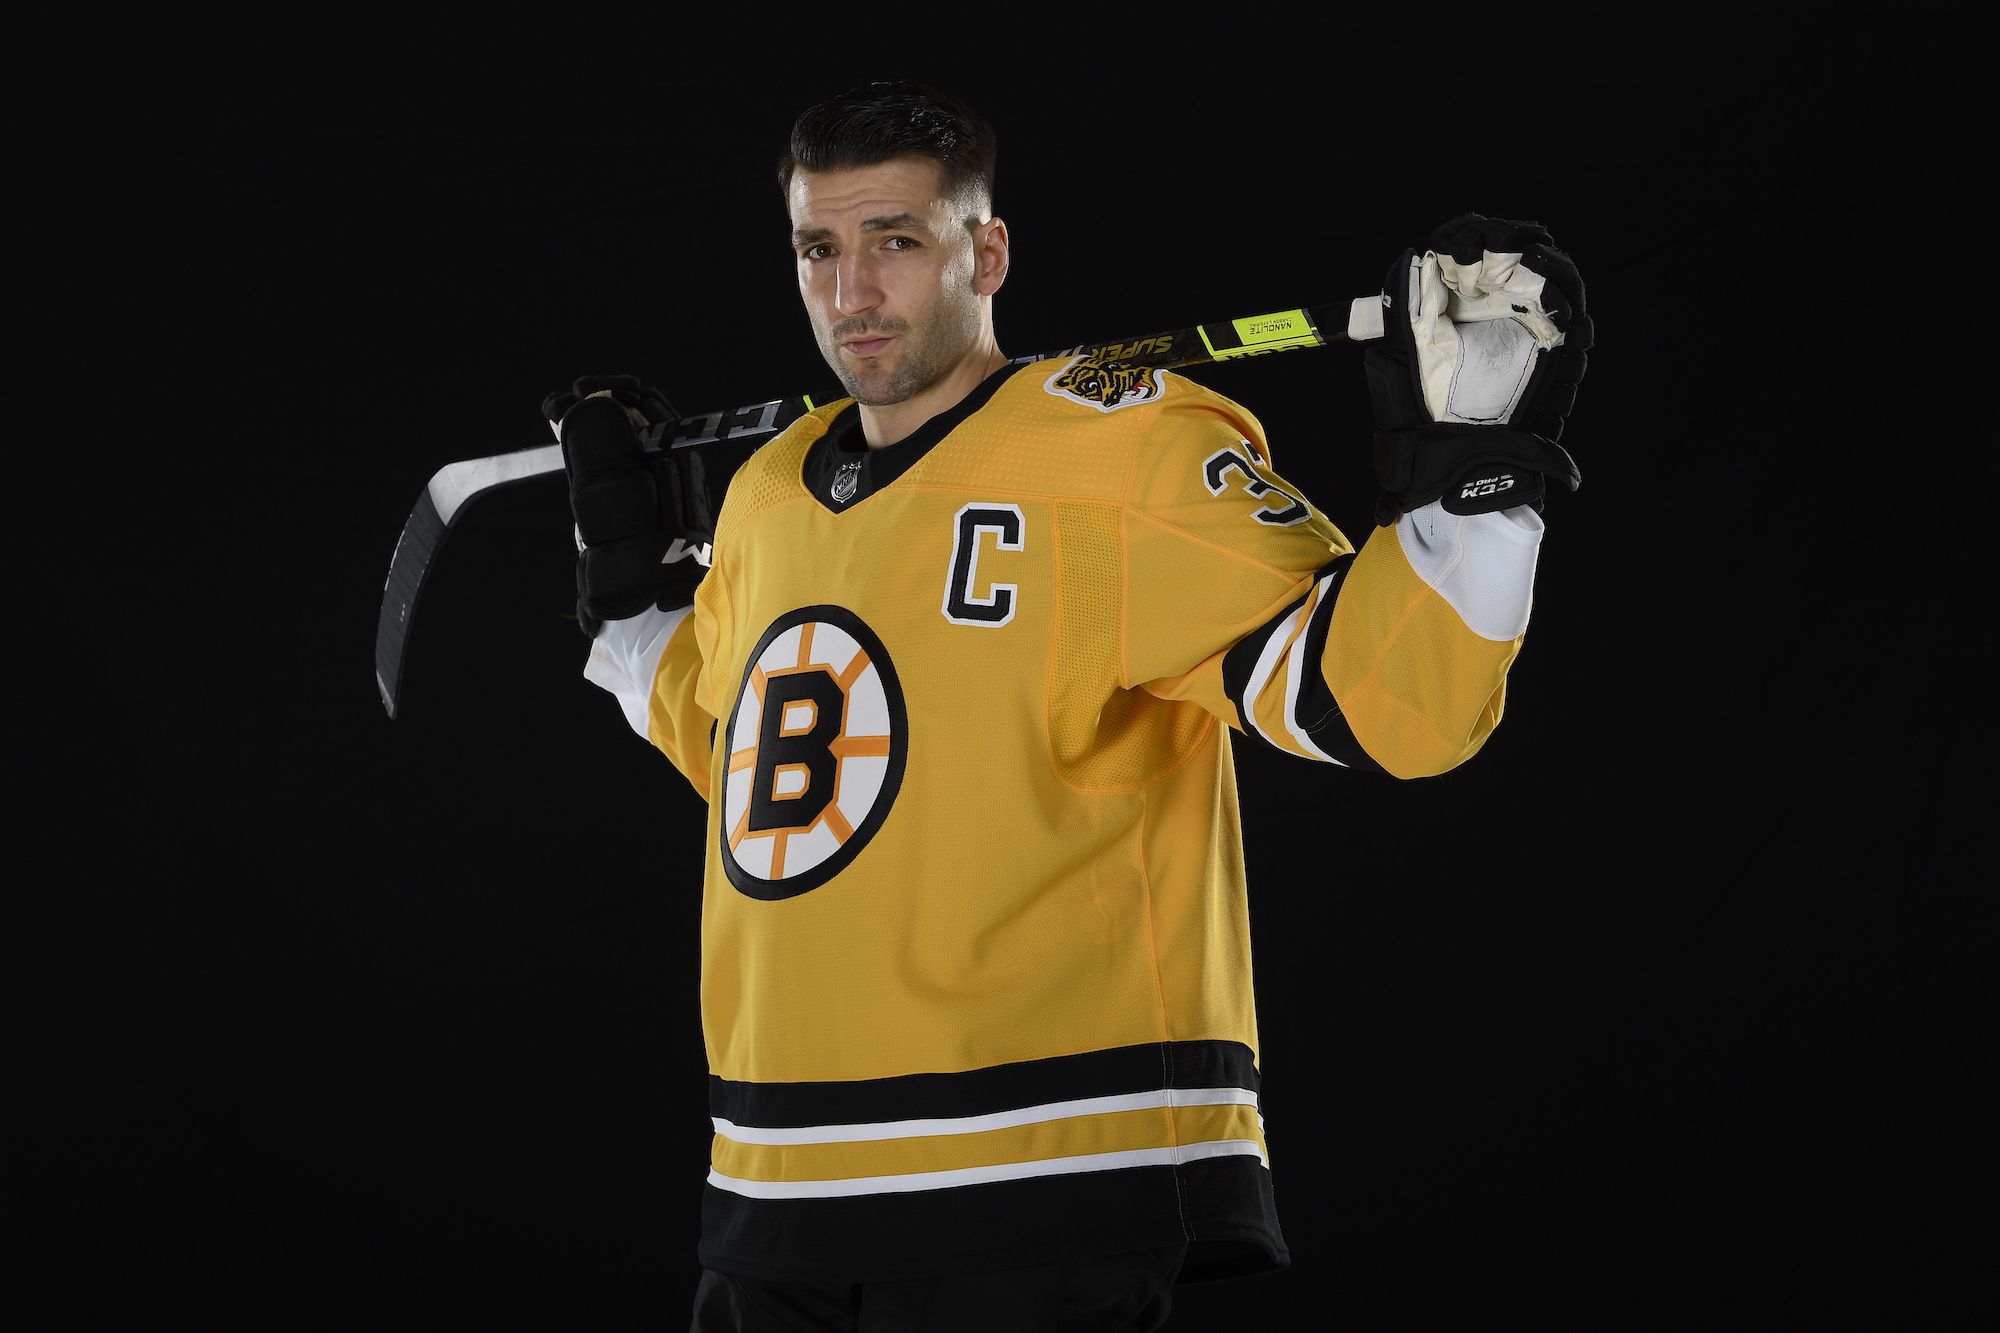 Patrice Bergeron Boston Bruins Hockey Jersey size 52